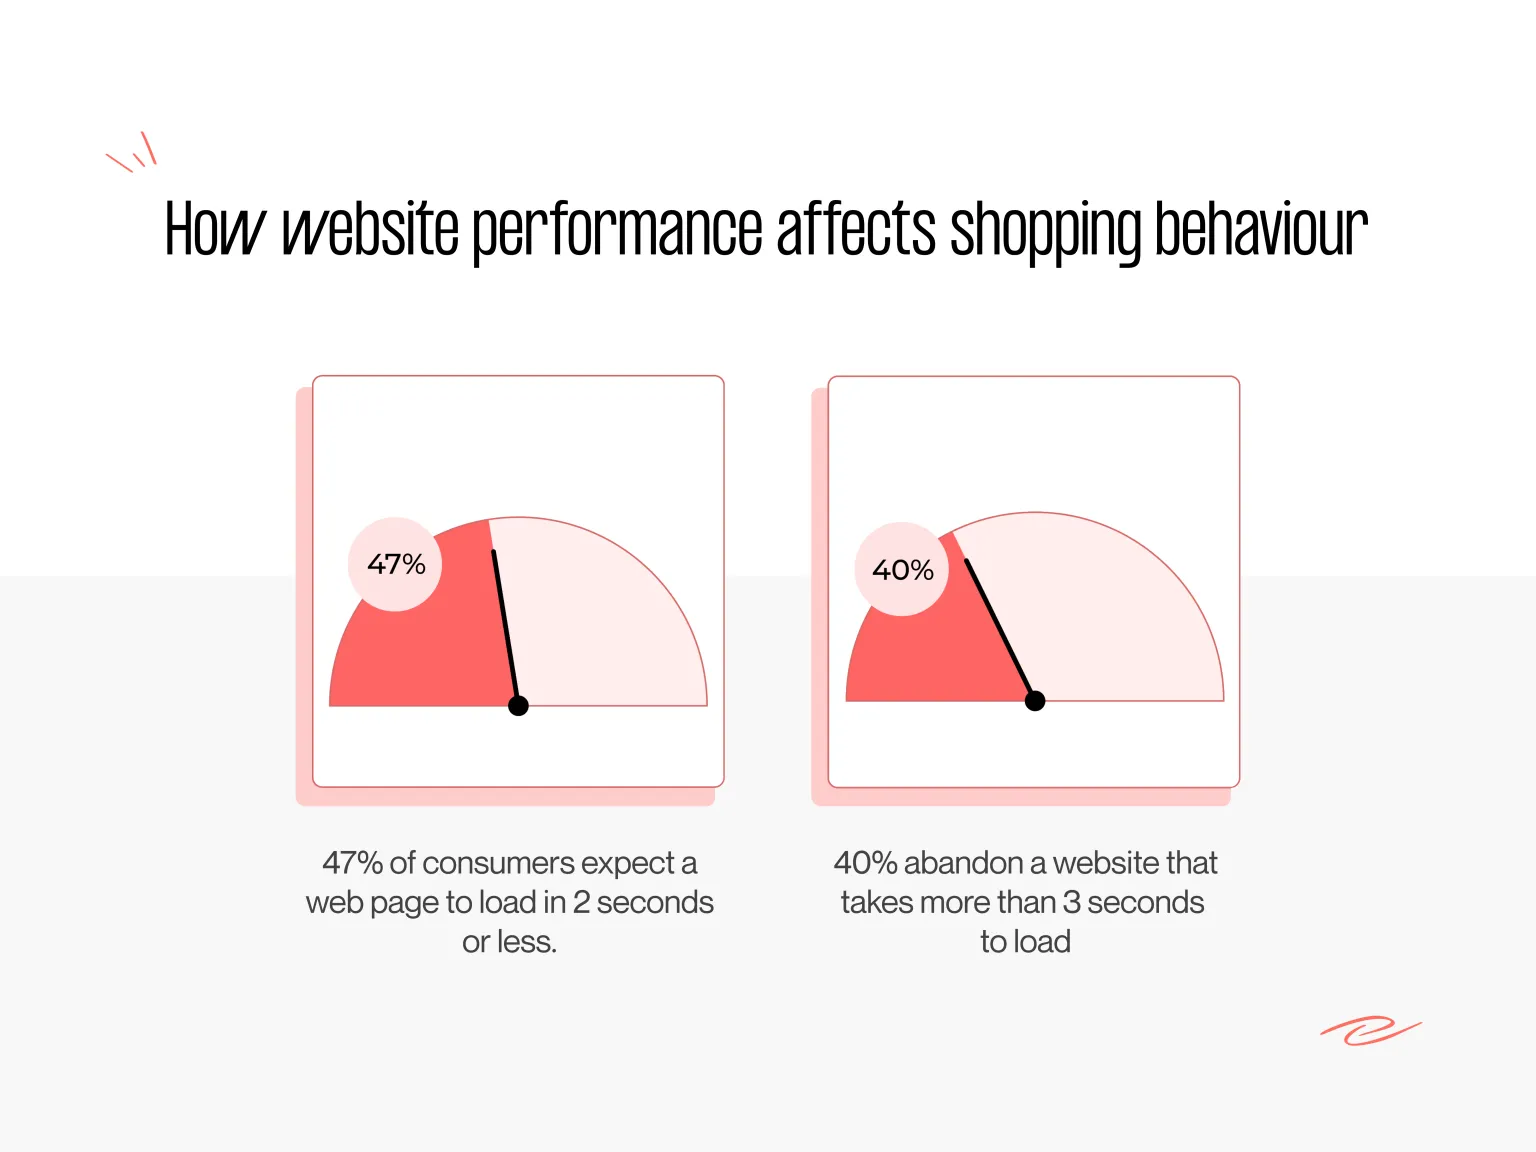 how website performance affects shopping behavior